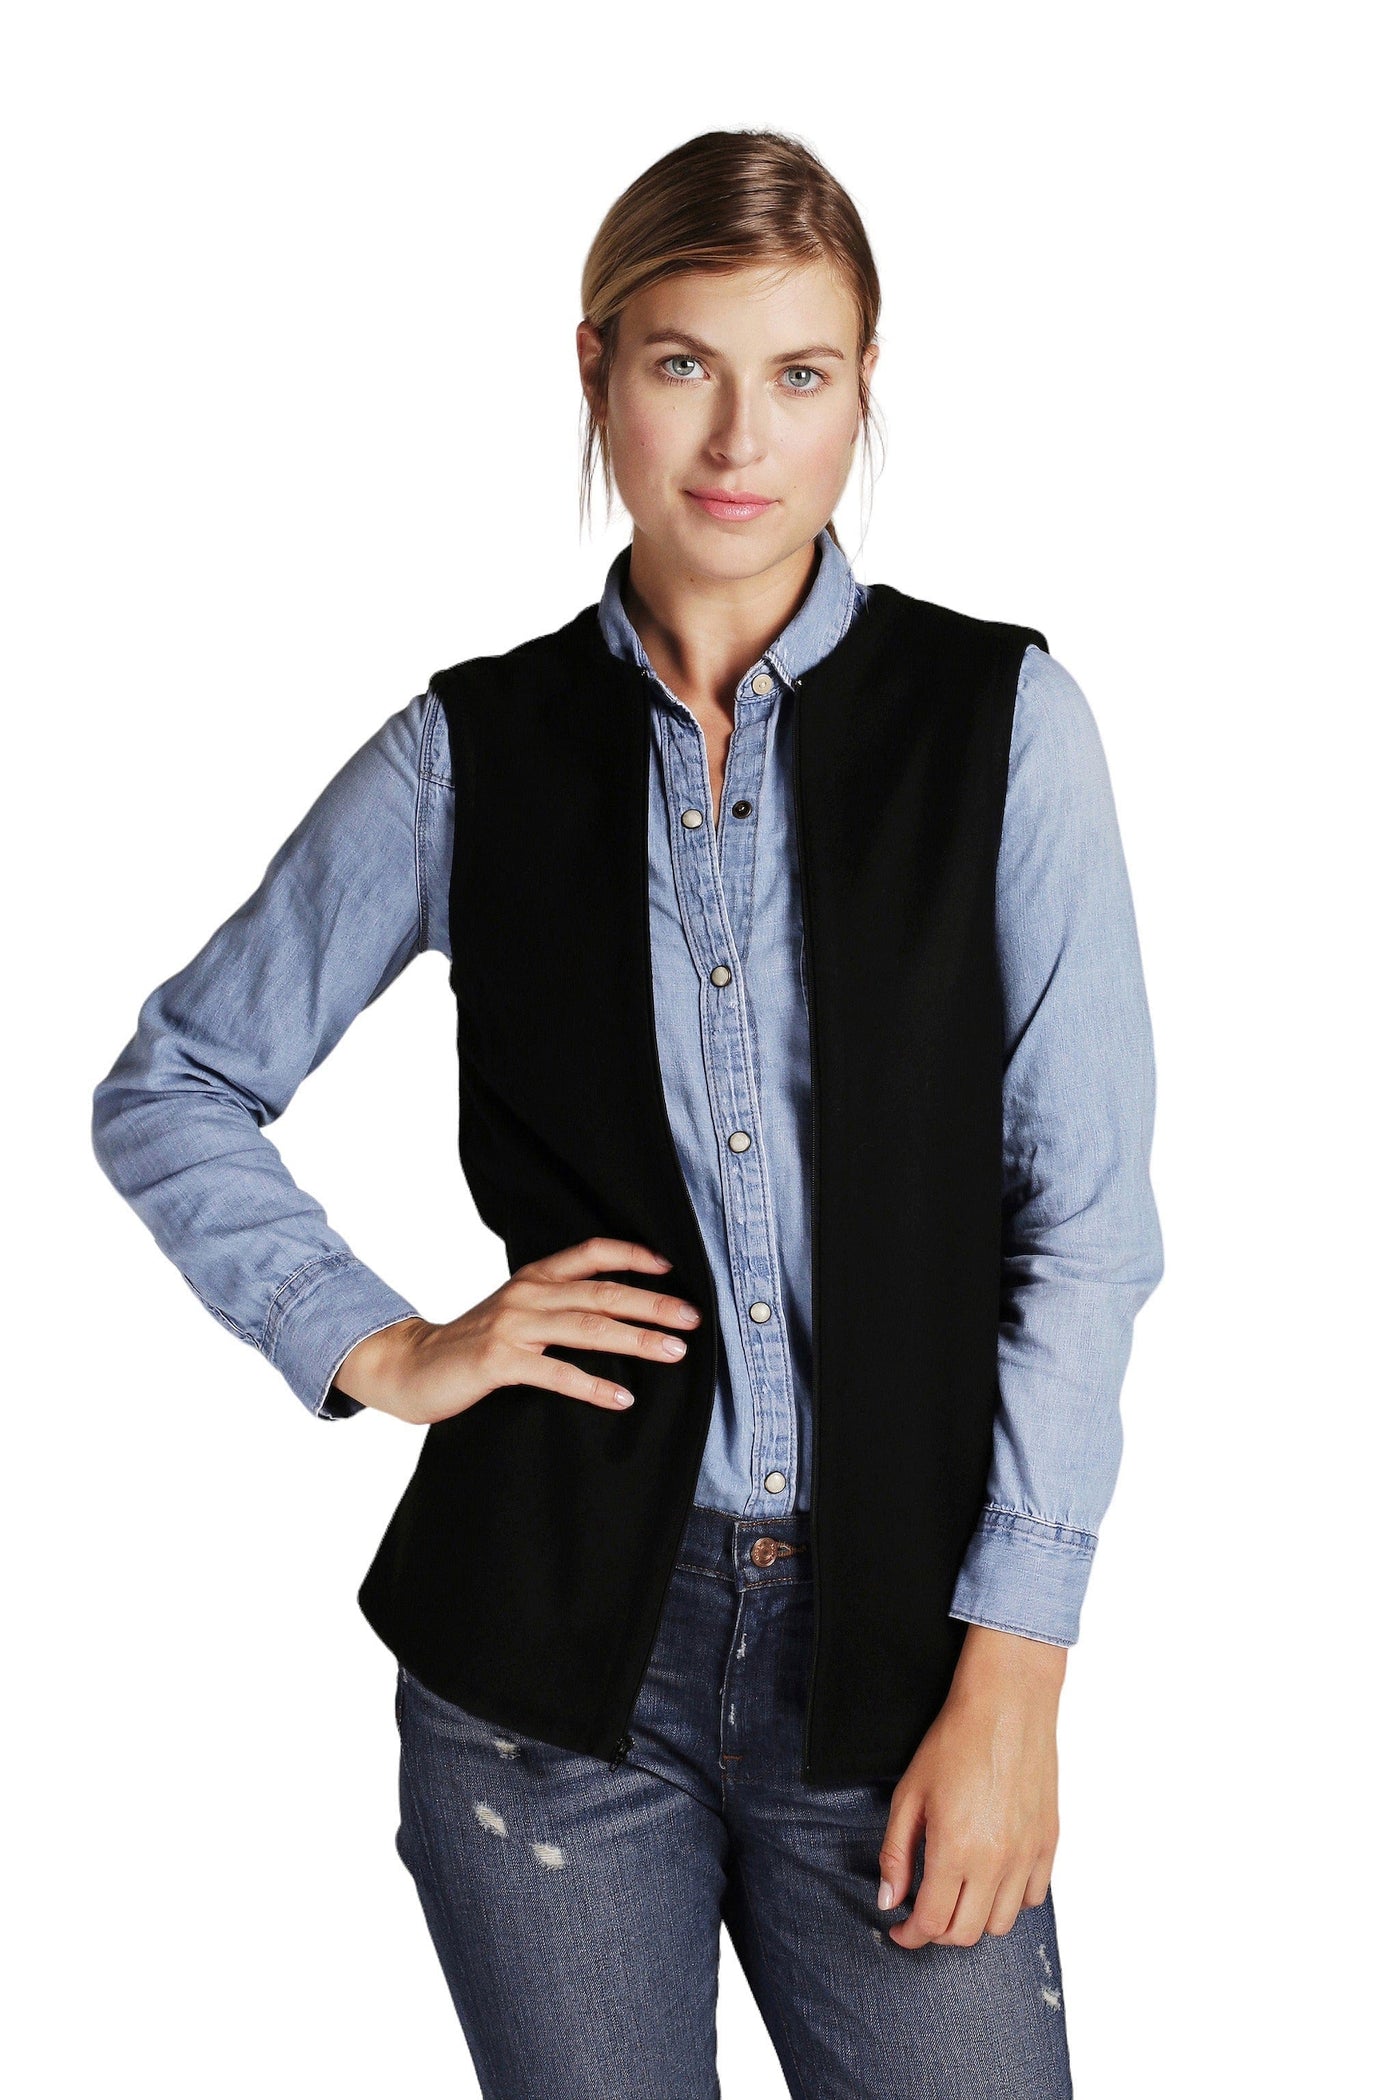 FELLER Vest Liners Black / XS Wool Liner | Fitted